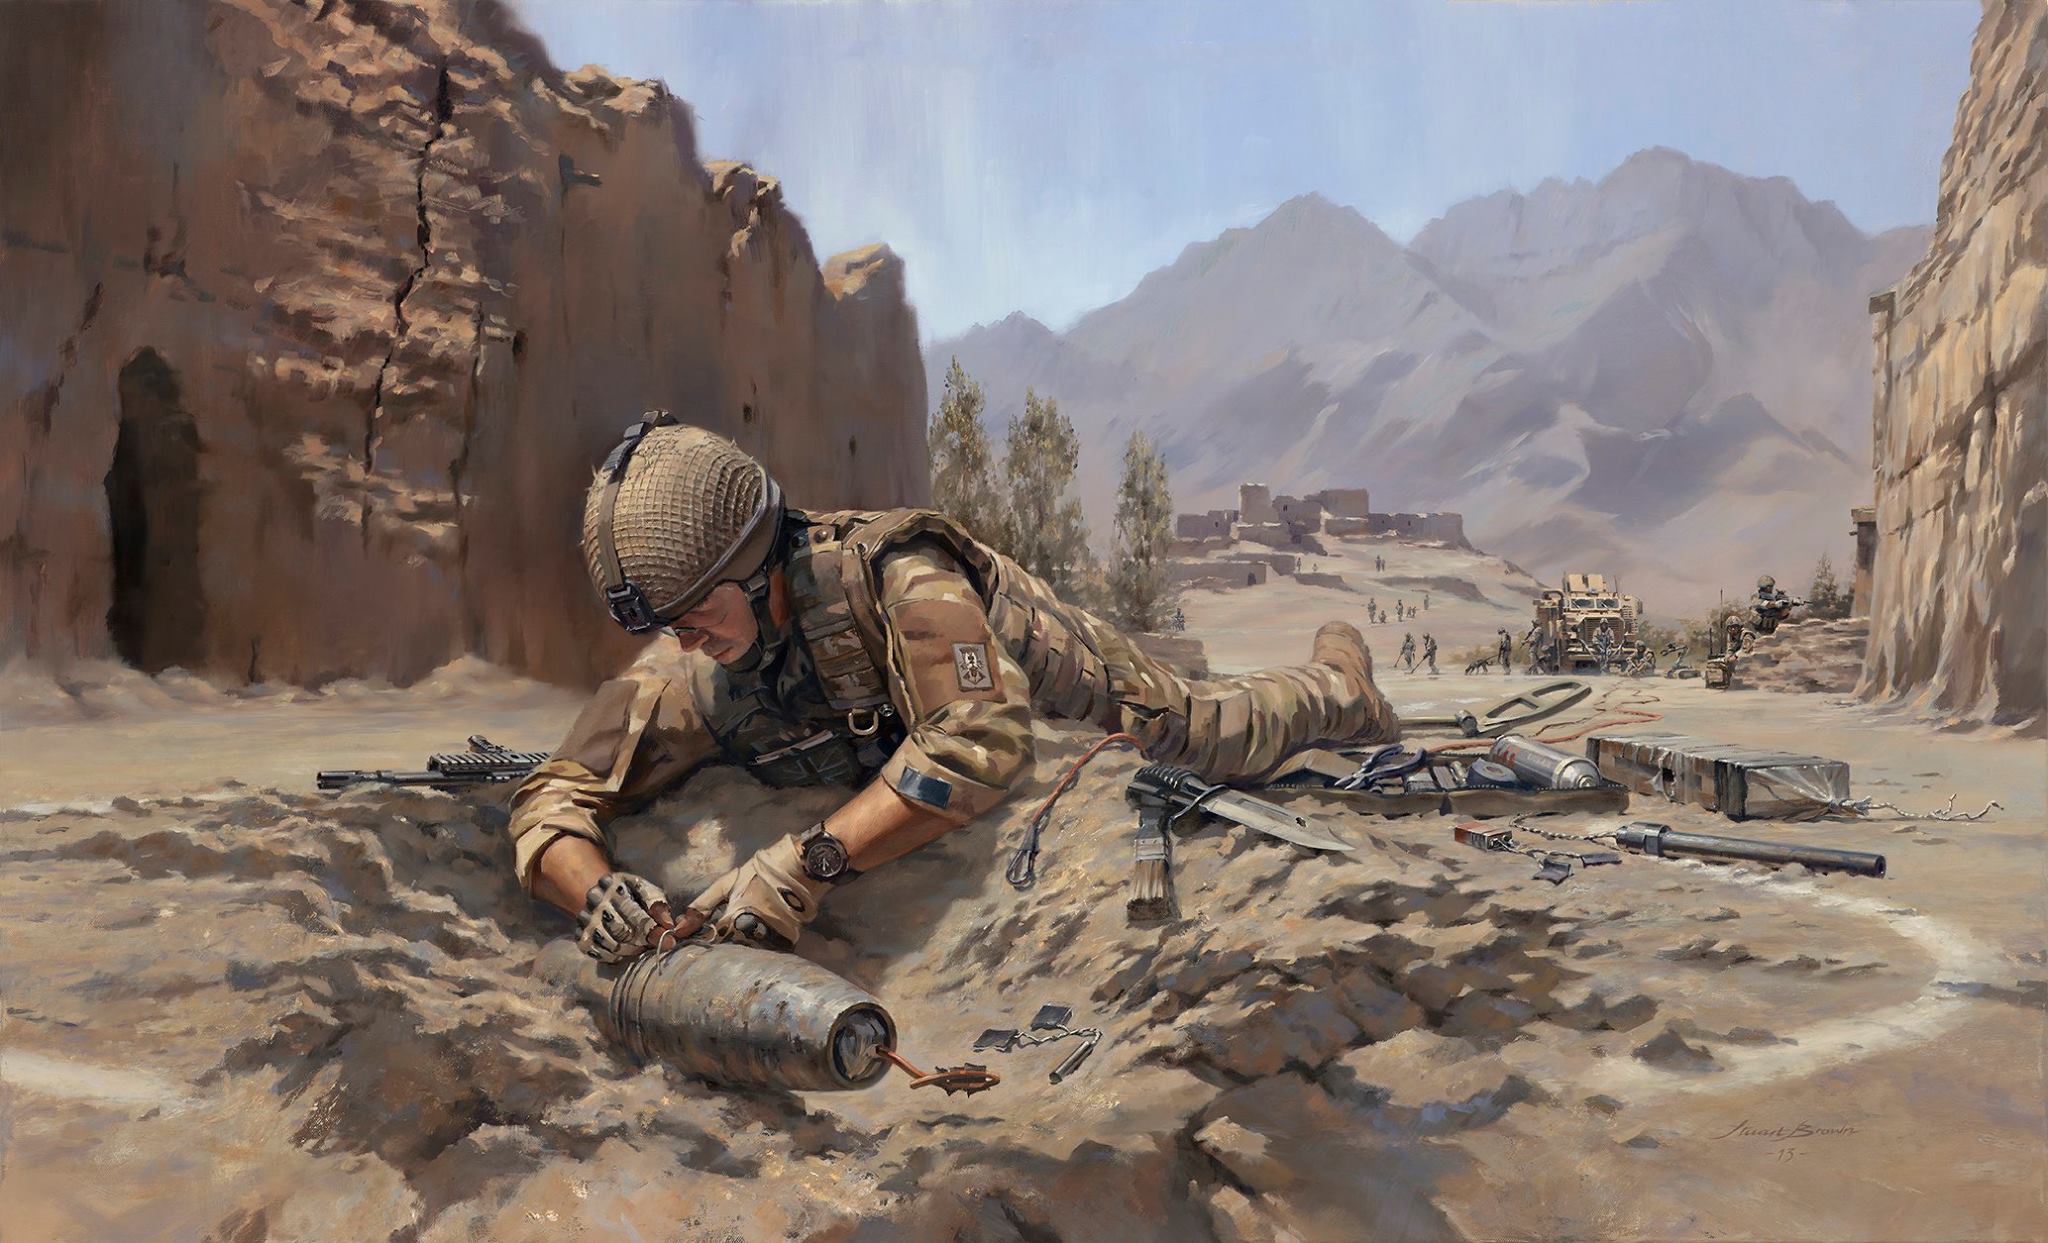 Army Watch Digital Art Watermarked Military 2048x1243